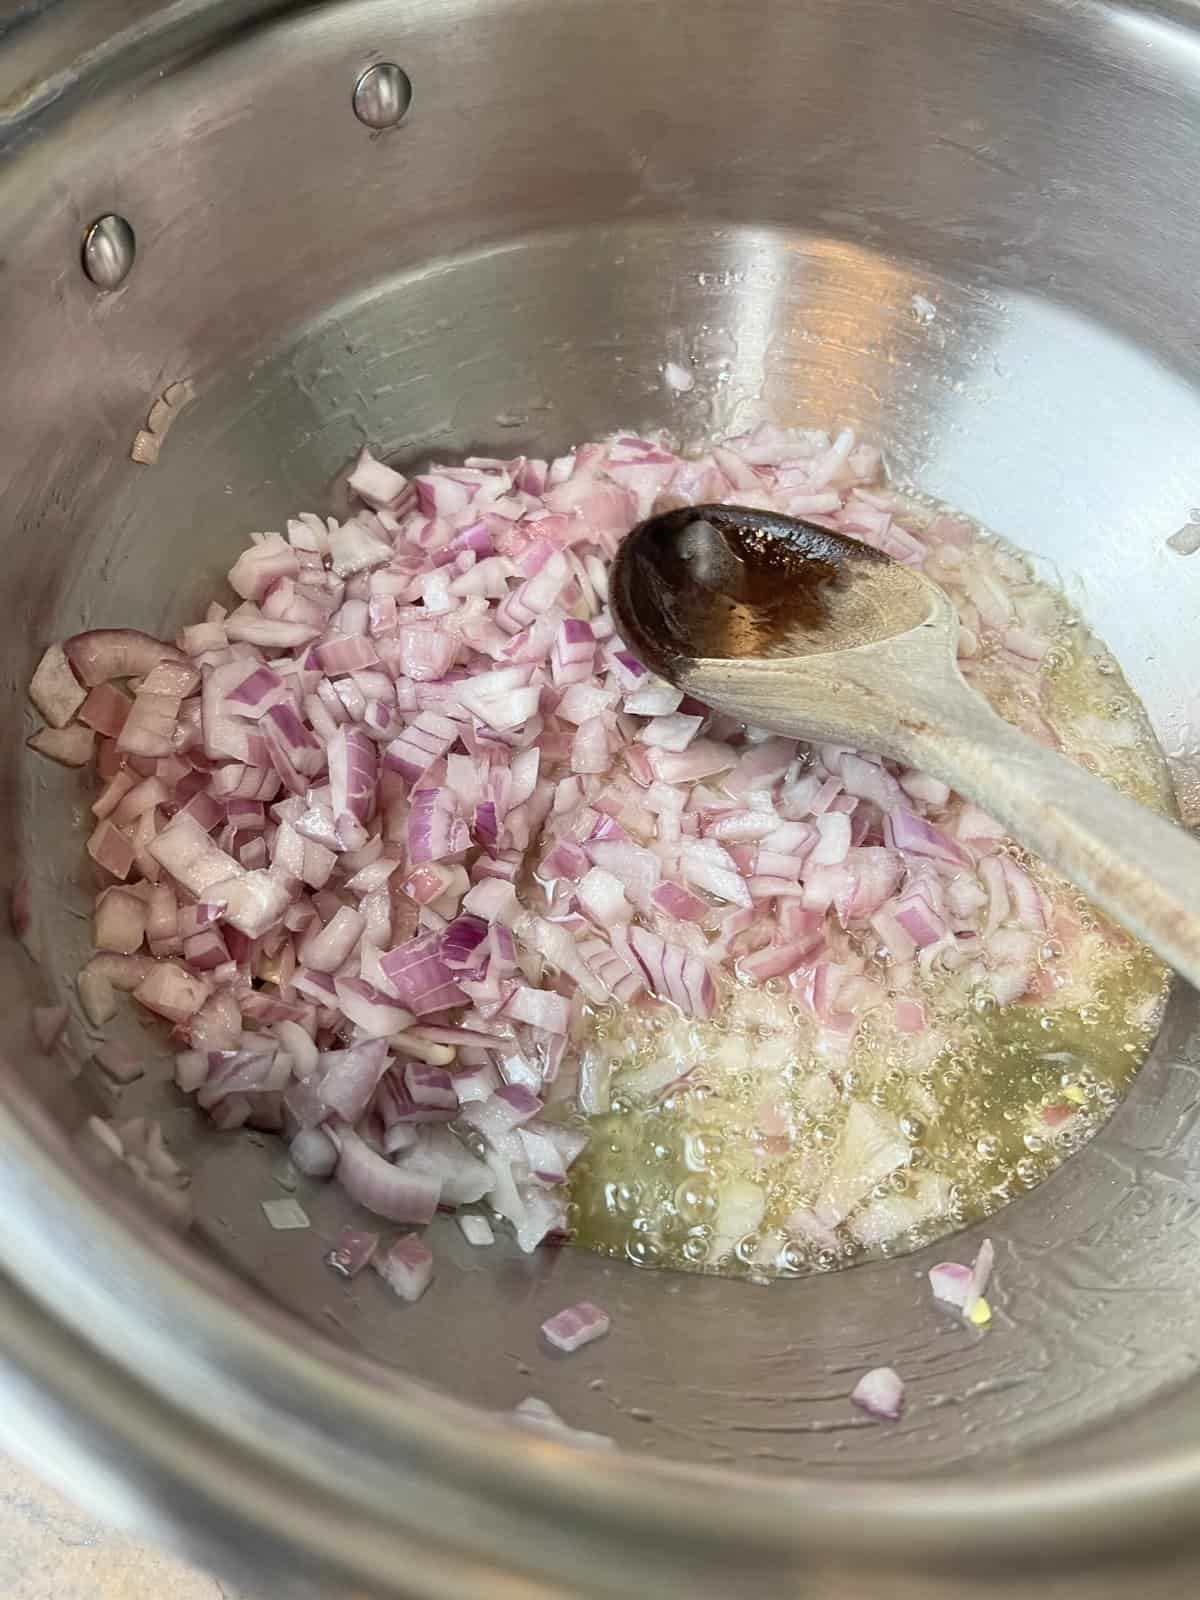 Saute the onions 